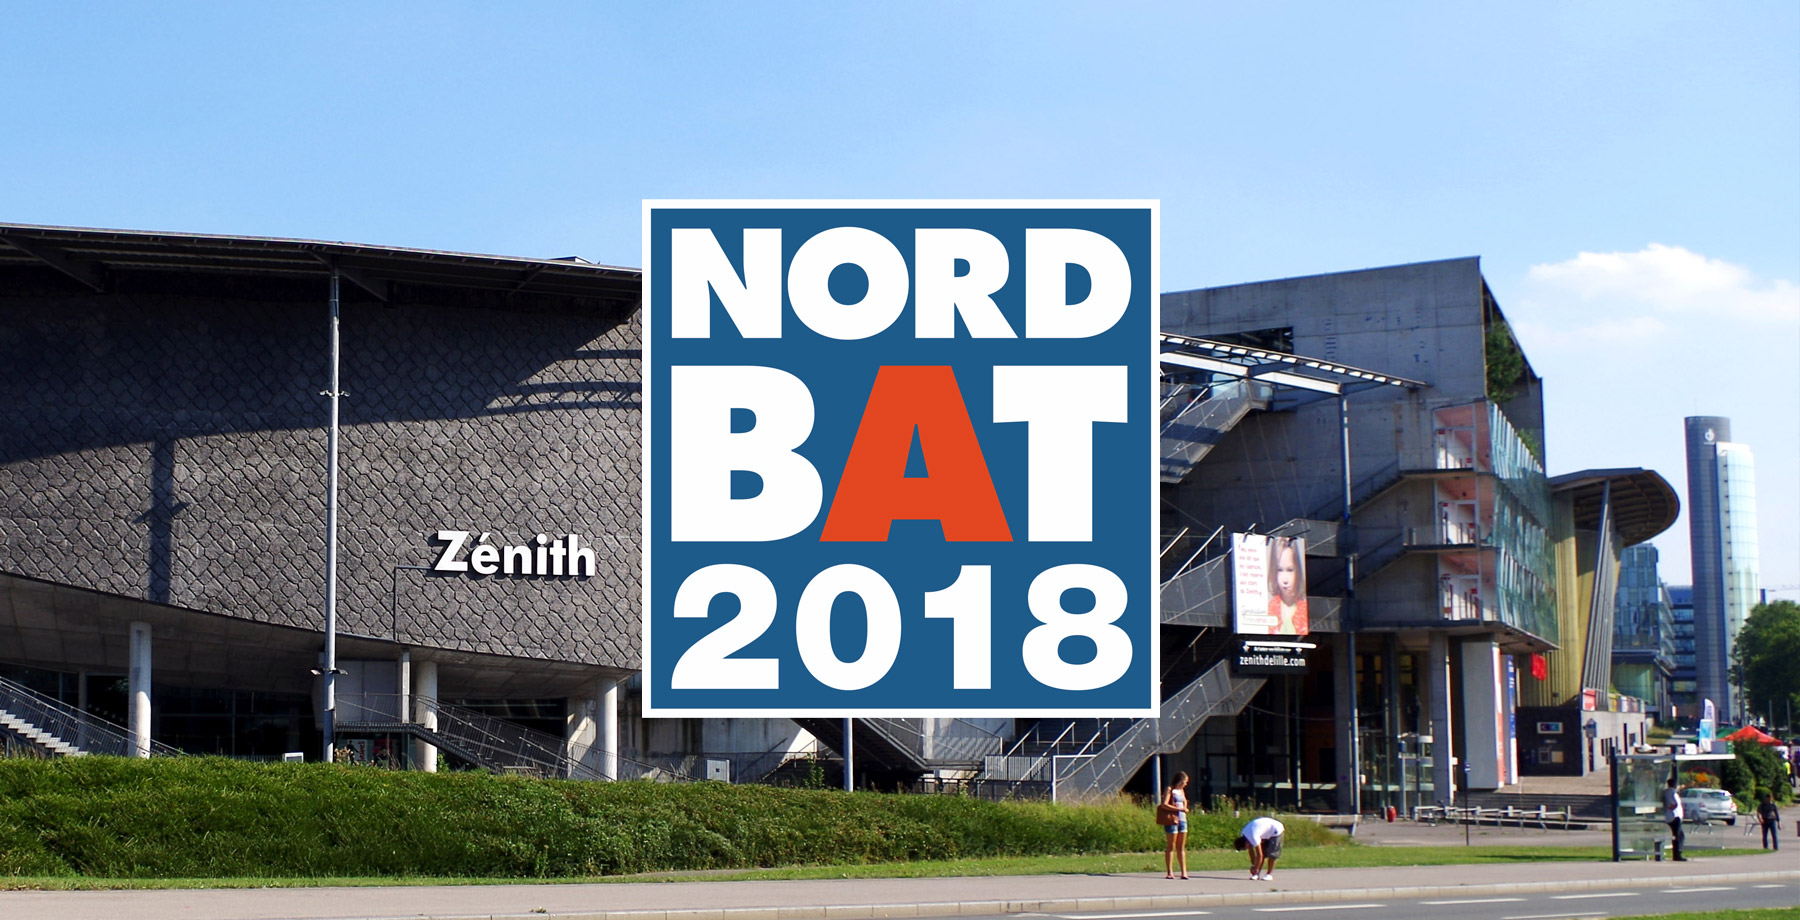 Recticel Salon NordBat 2018